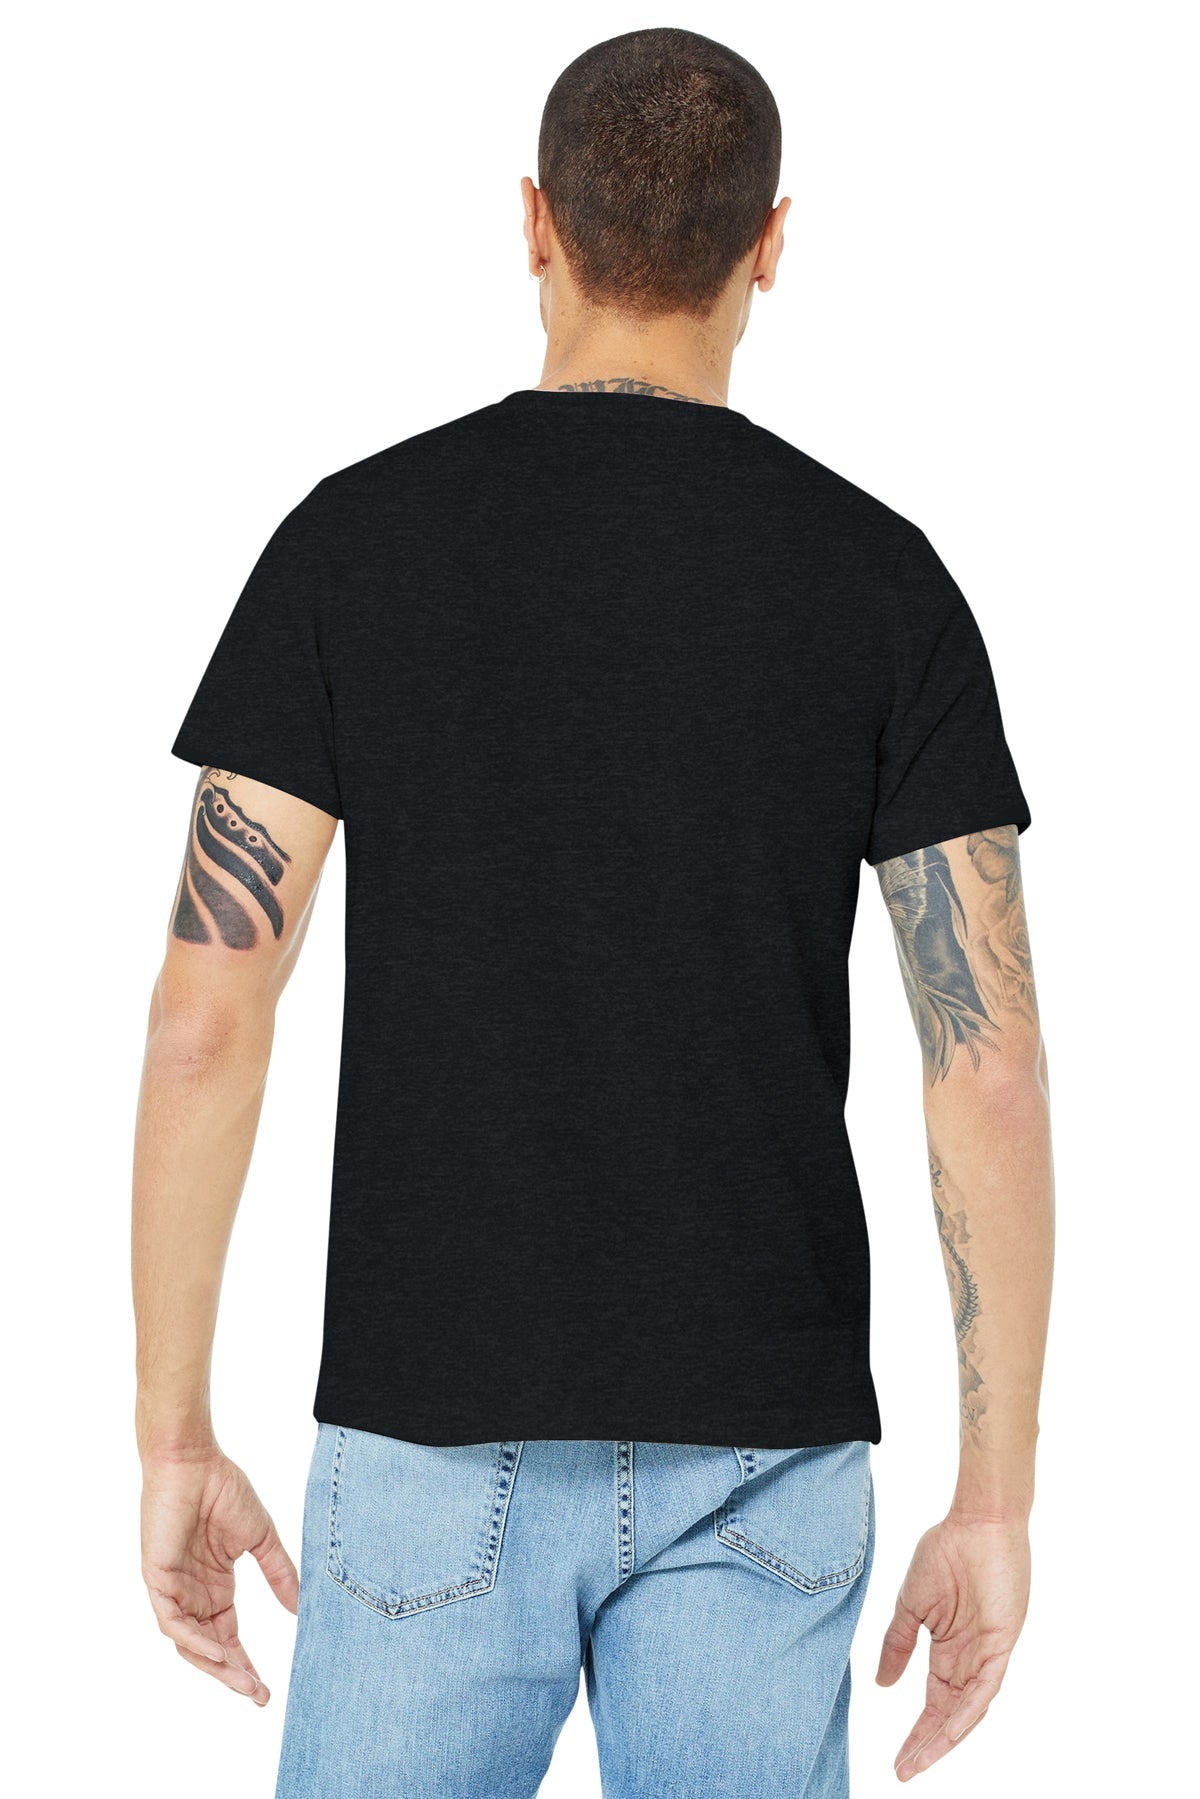 bella + canvas unisex made in the usa jersey short sleeve t-shirt 3001u drk grey heather